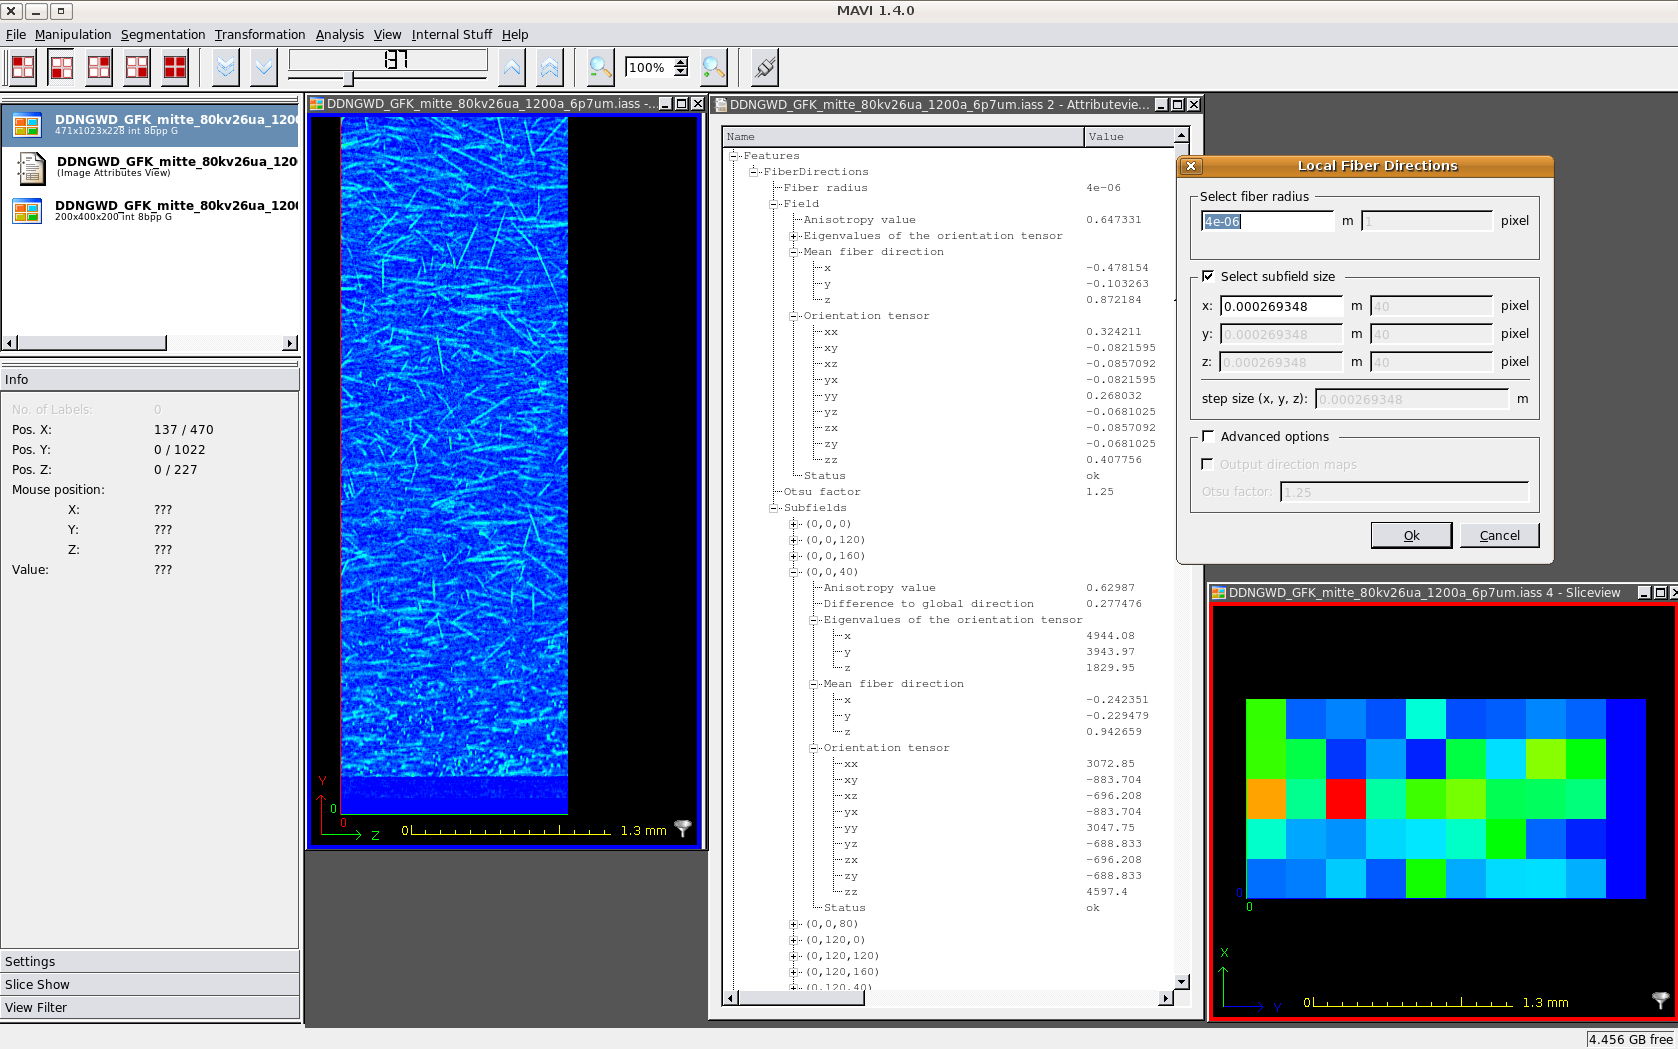 Screenshot des Moduls zur Faserrichtungsanalyse in MAVI 1.4